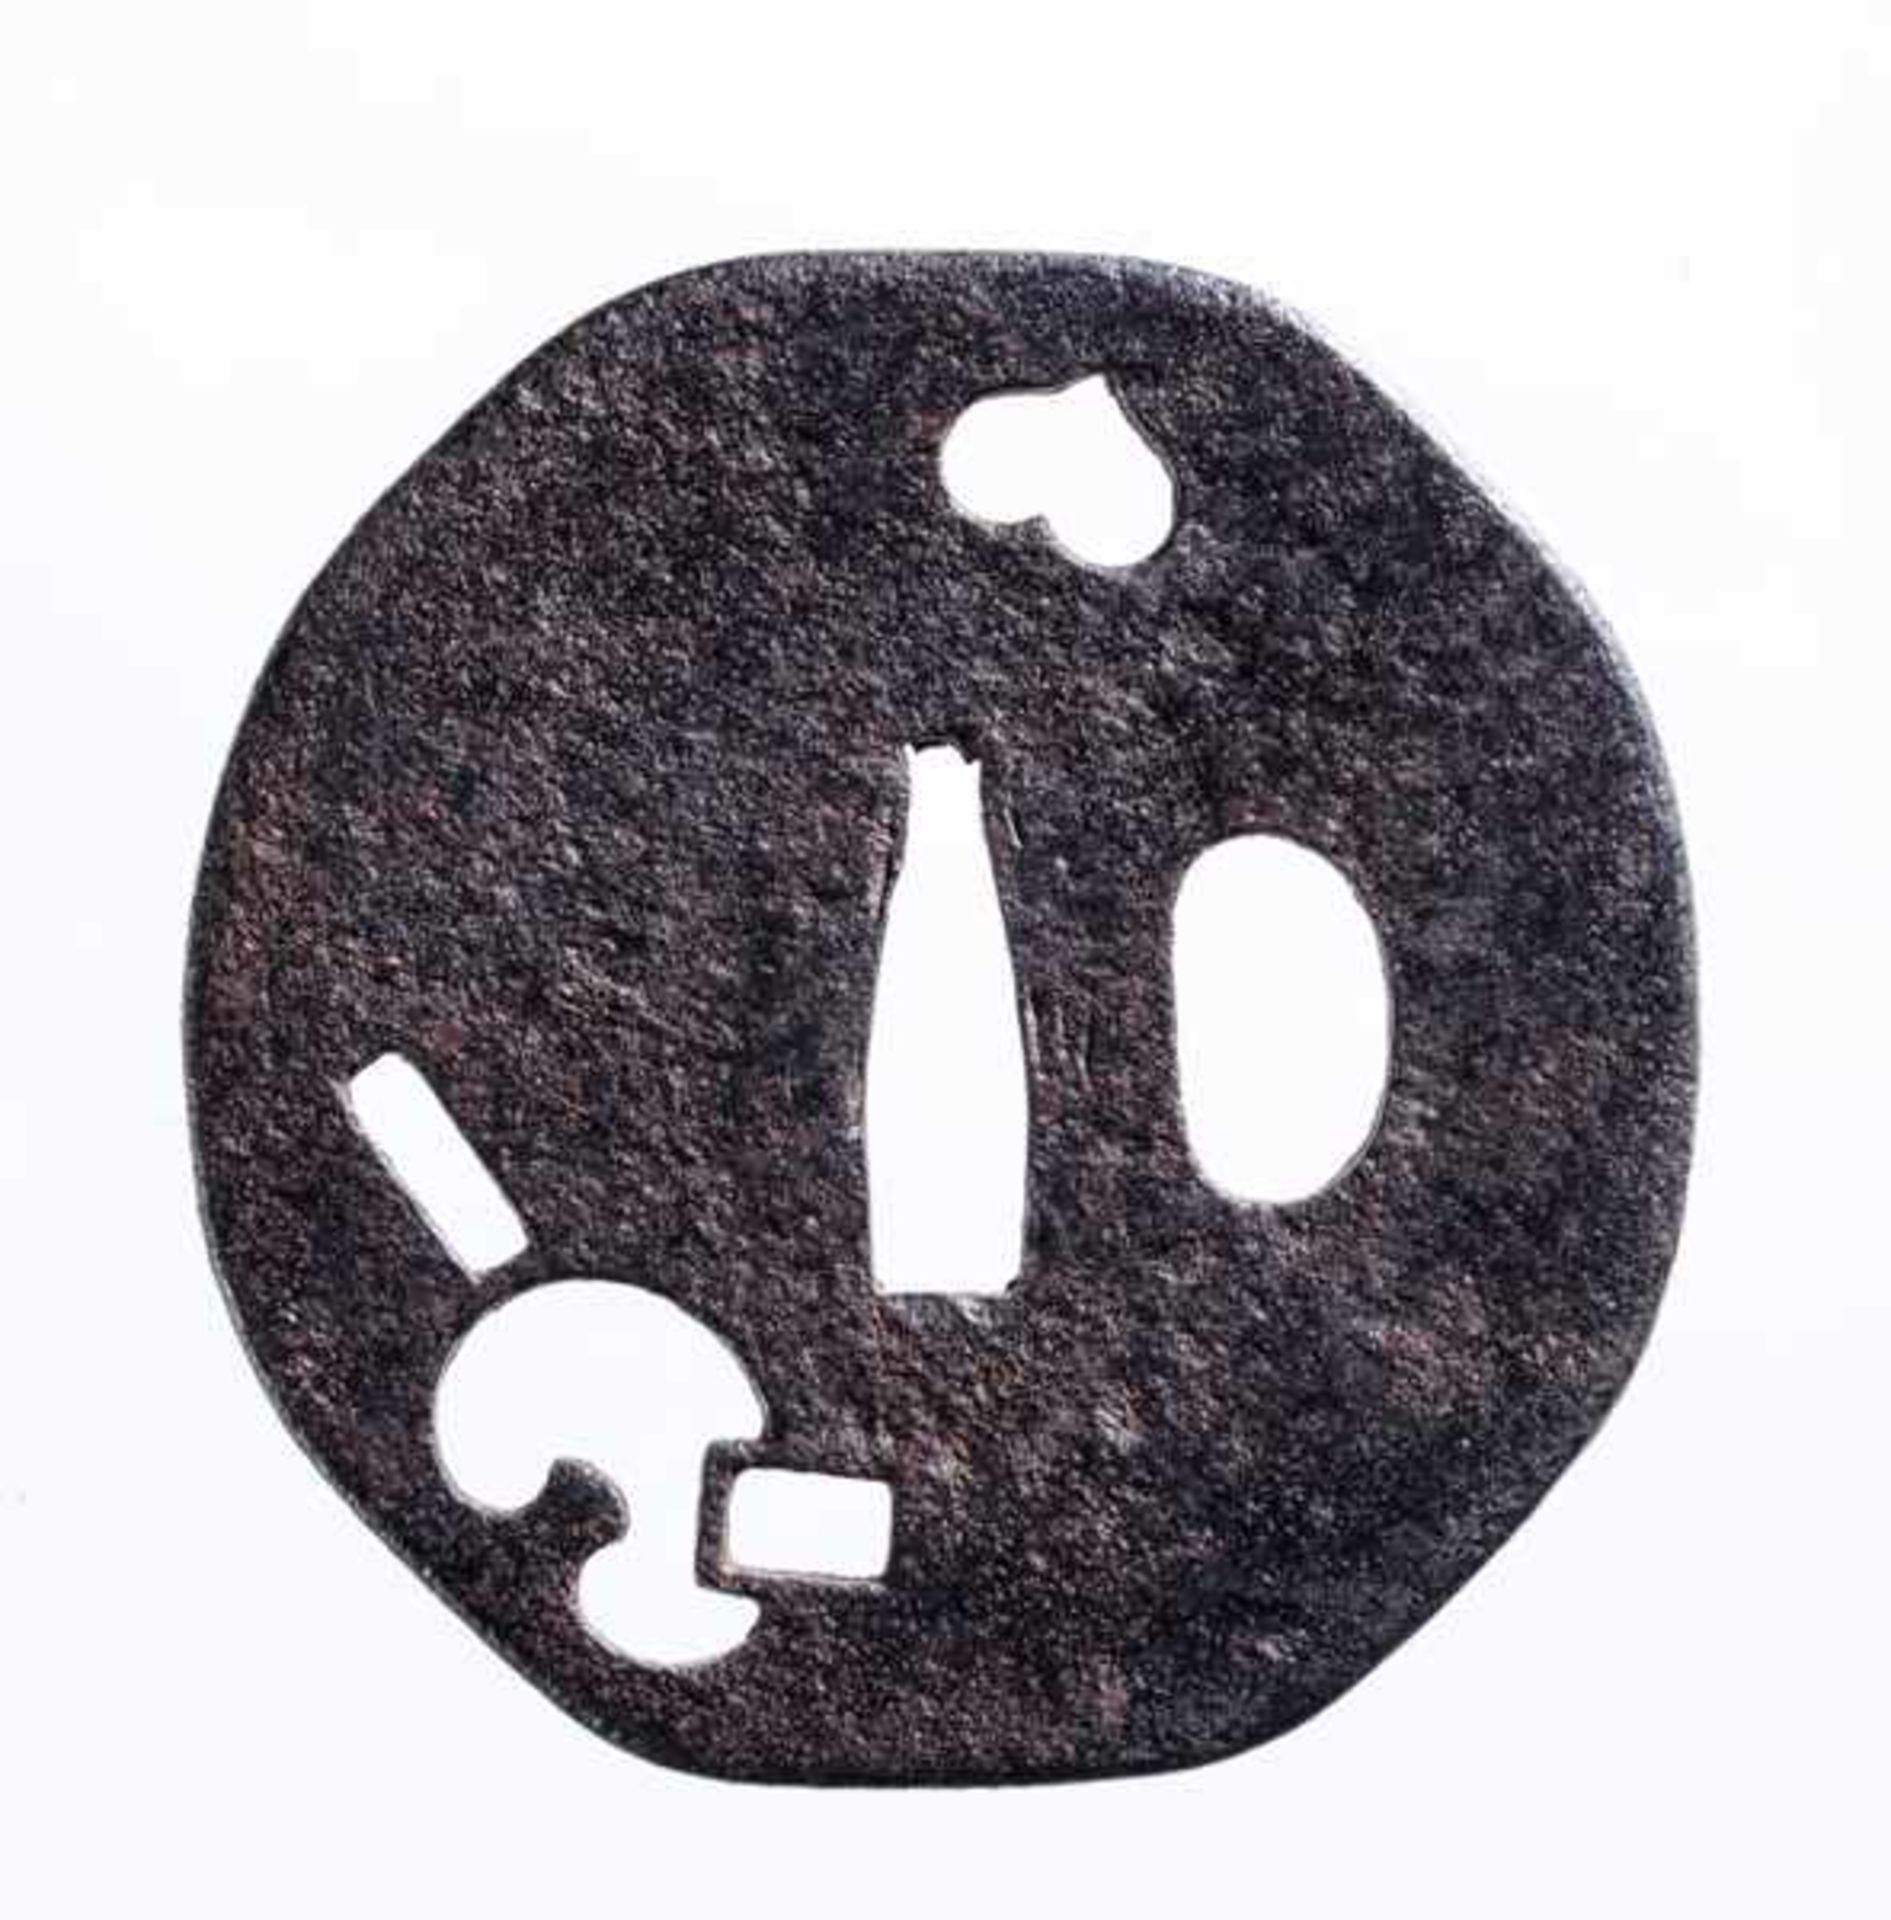 AN IRON SUKASHI TSUBA Iron. Japan, Muromachi period or afterYatsu mokko, a slight octagon/circular